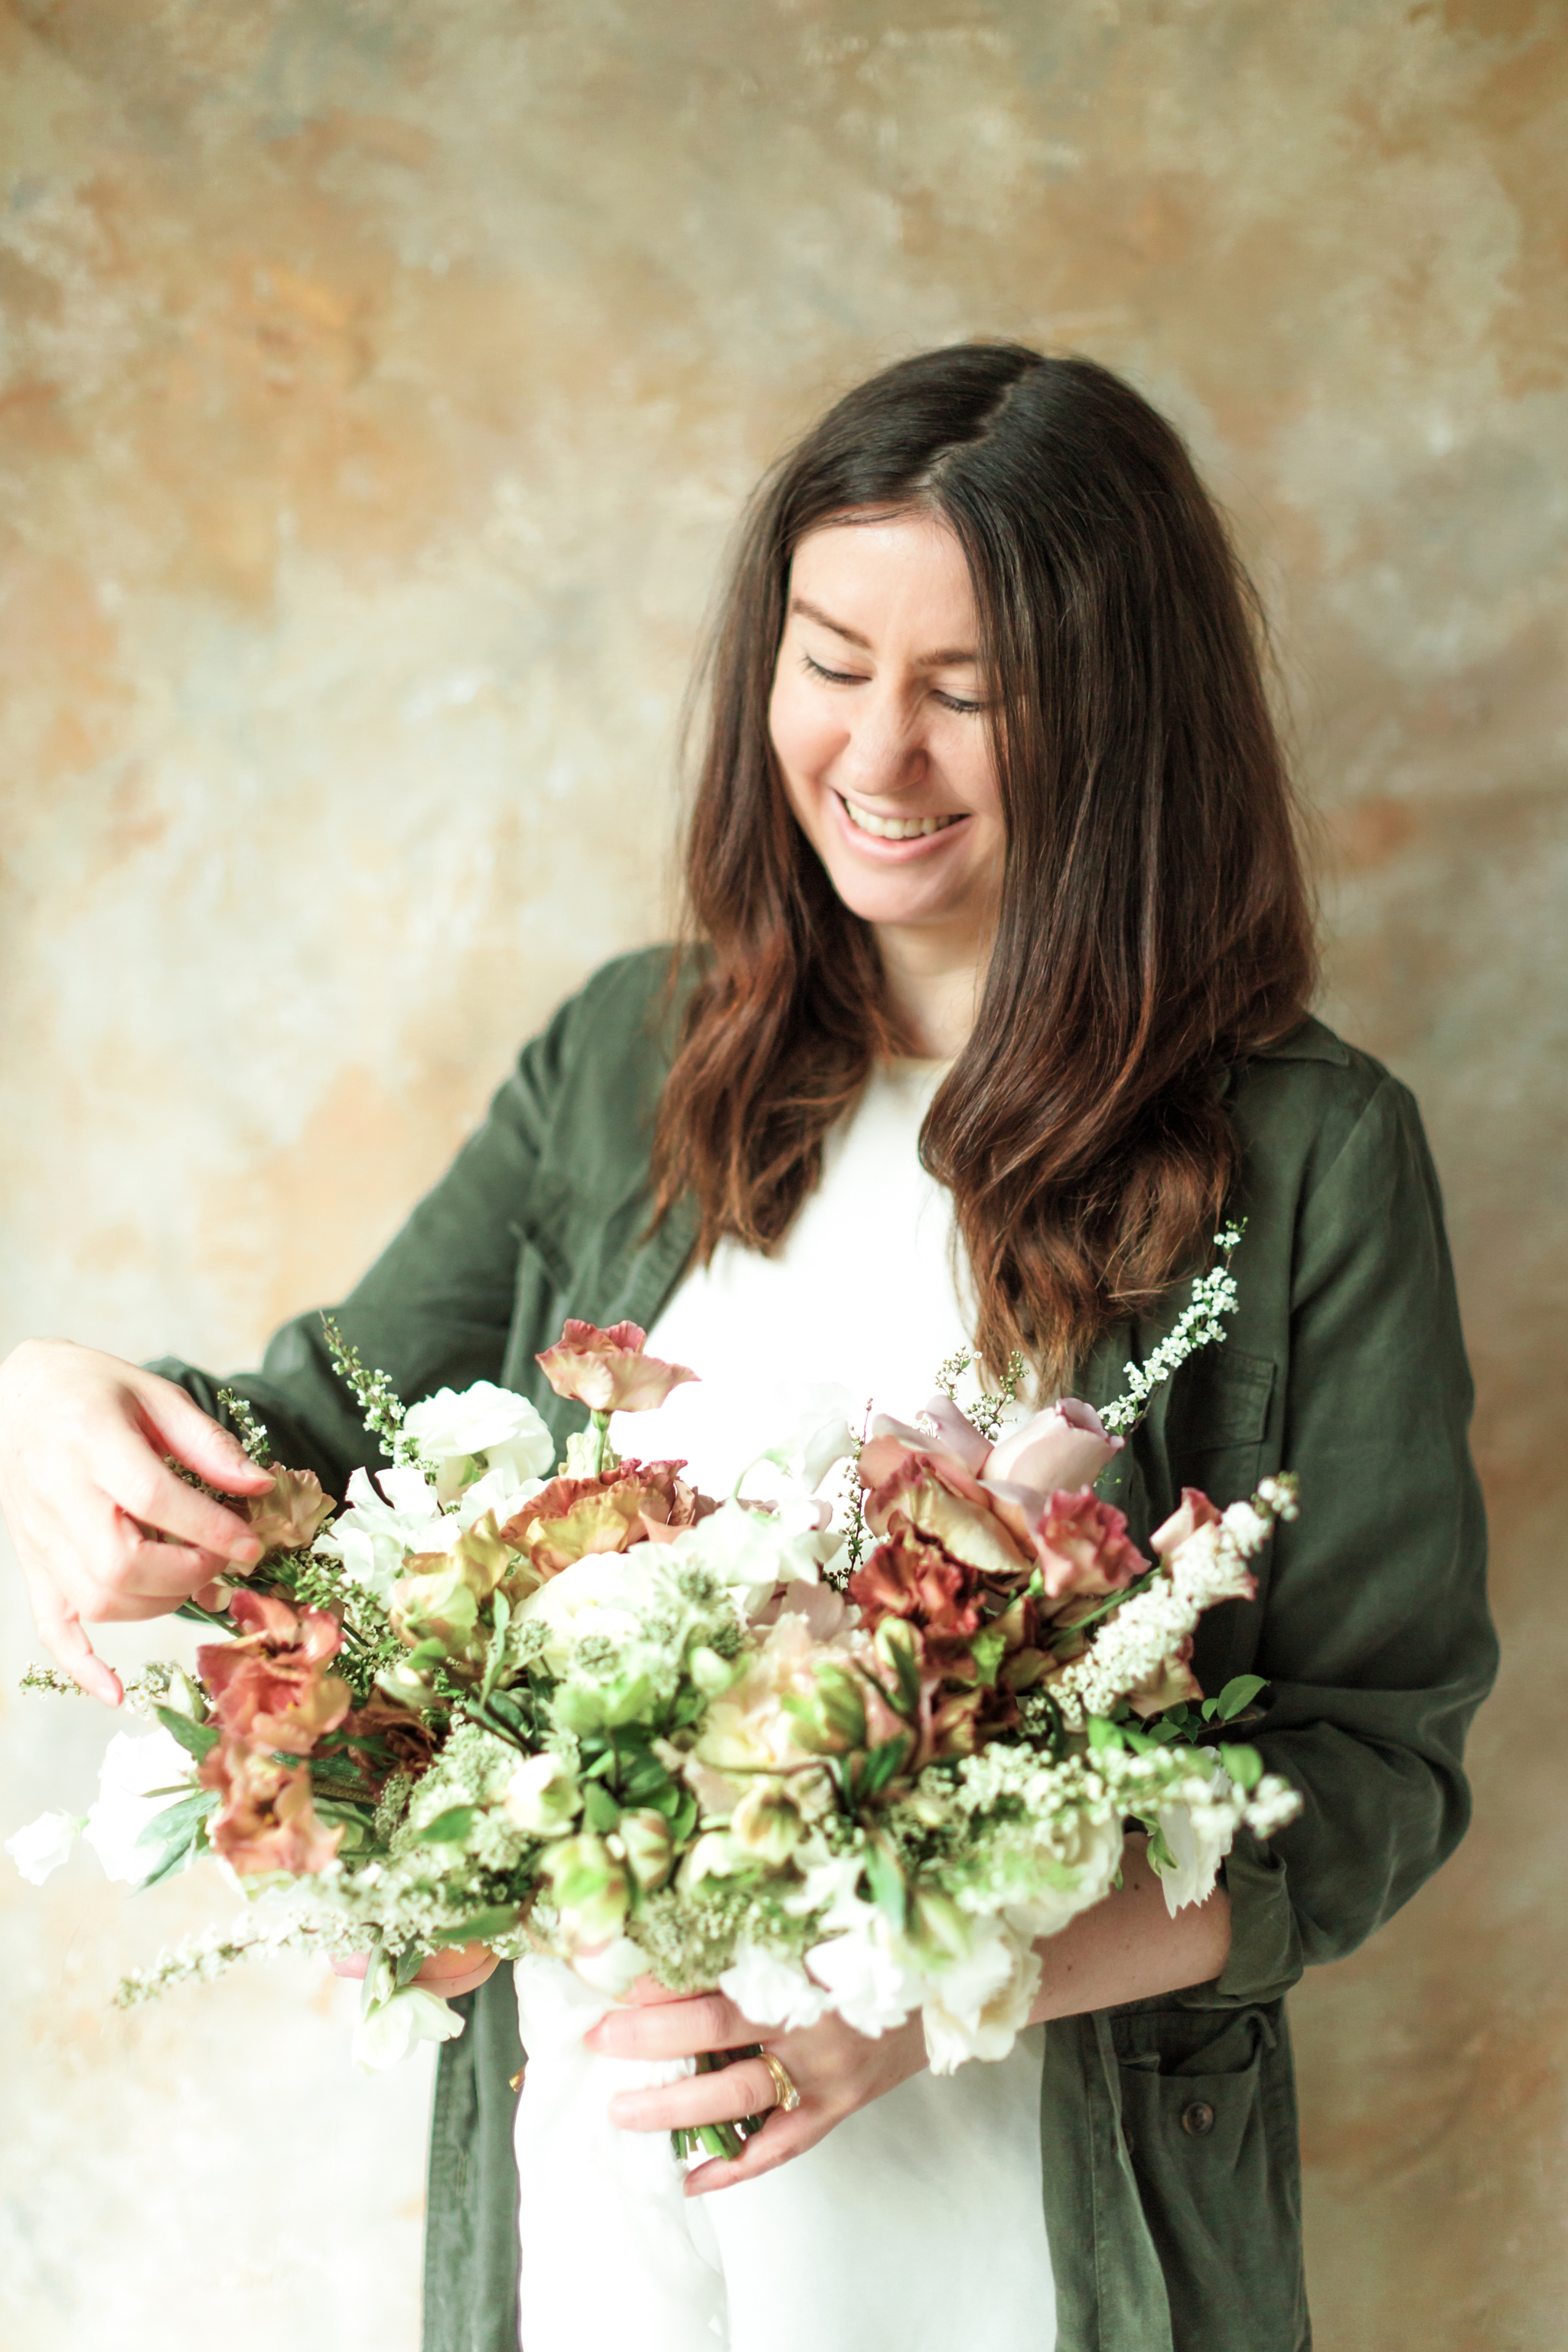 Roots Floral Design owner, Kaytee Stice arranges a wedding bouquet